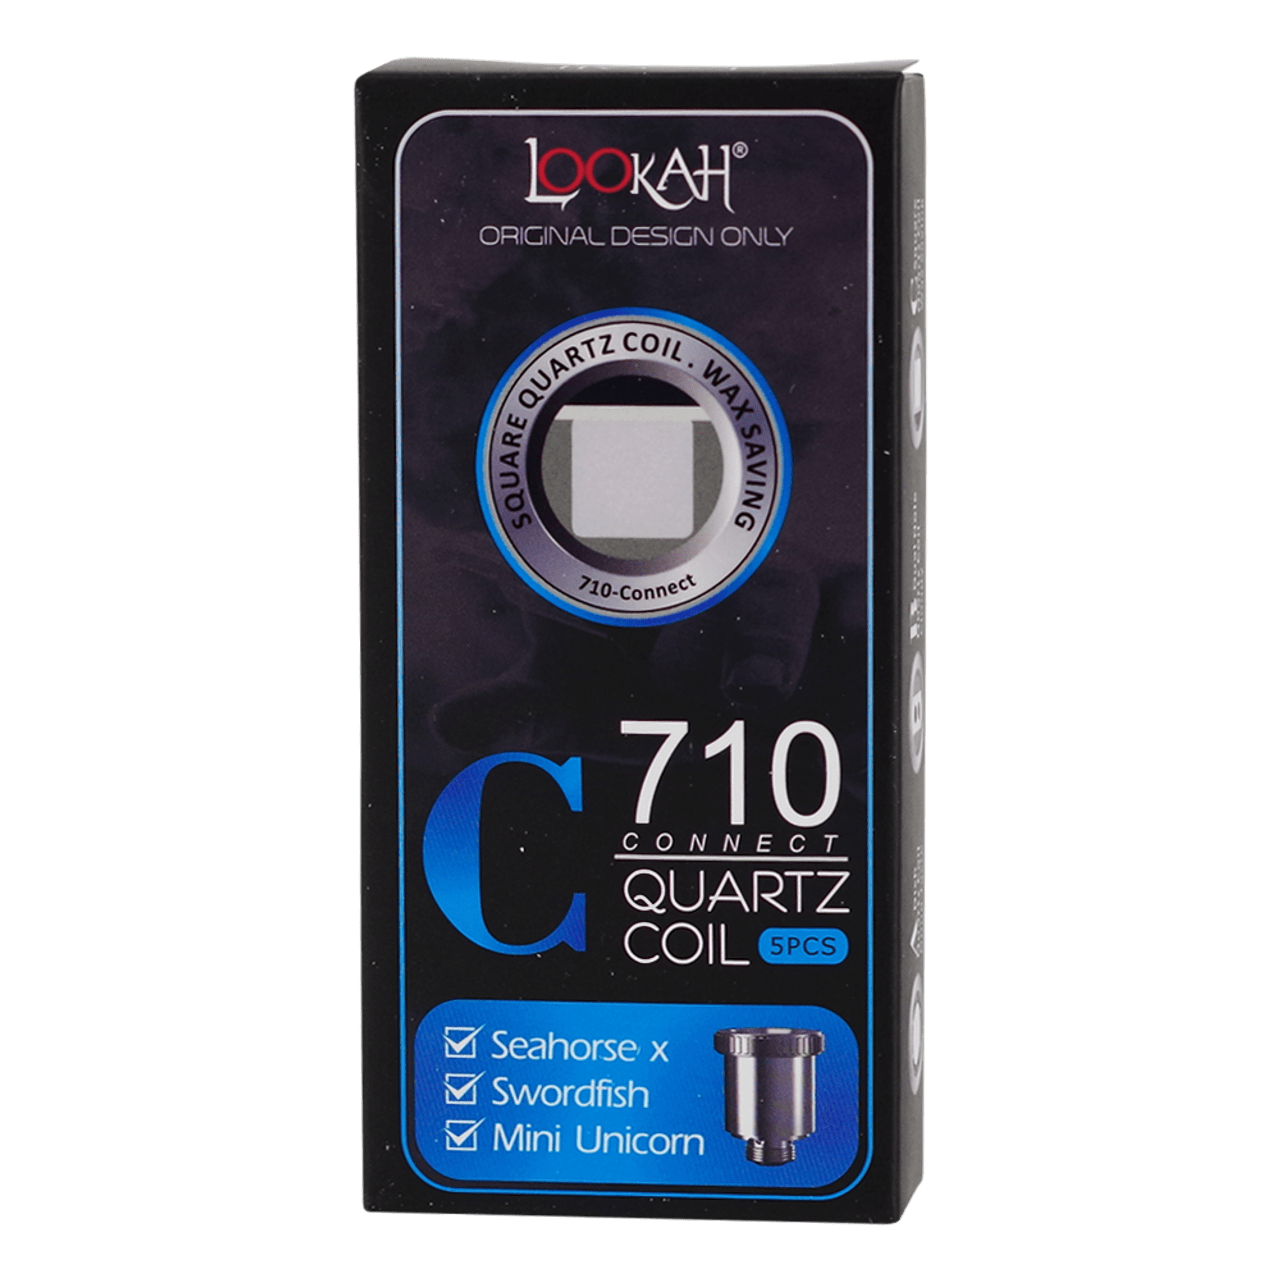 Lookah 710 Connect Quartz Coils 5 Pack - Supply Natural